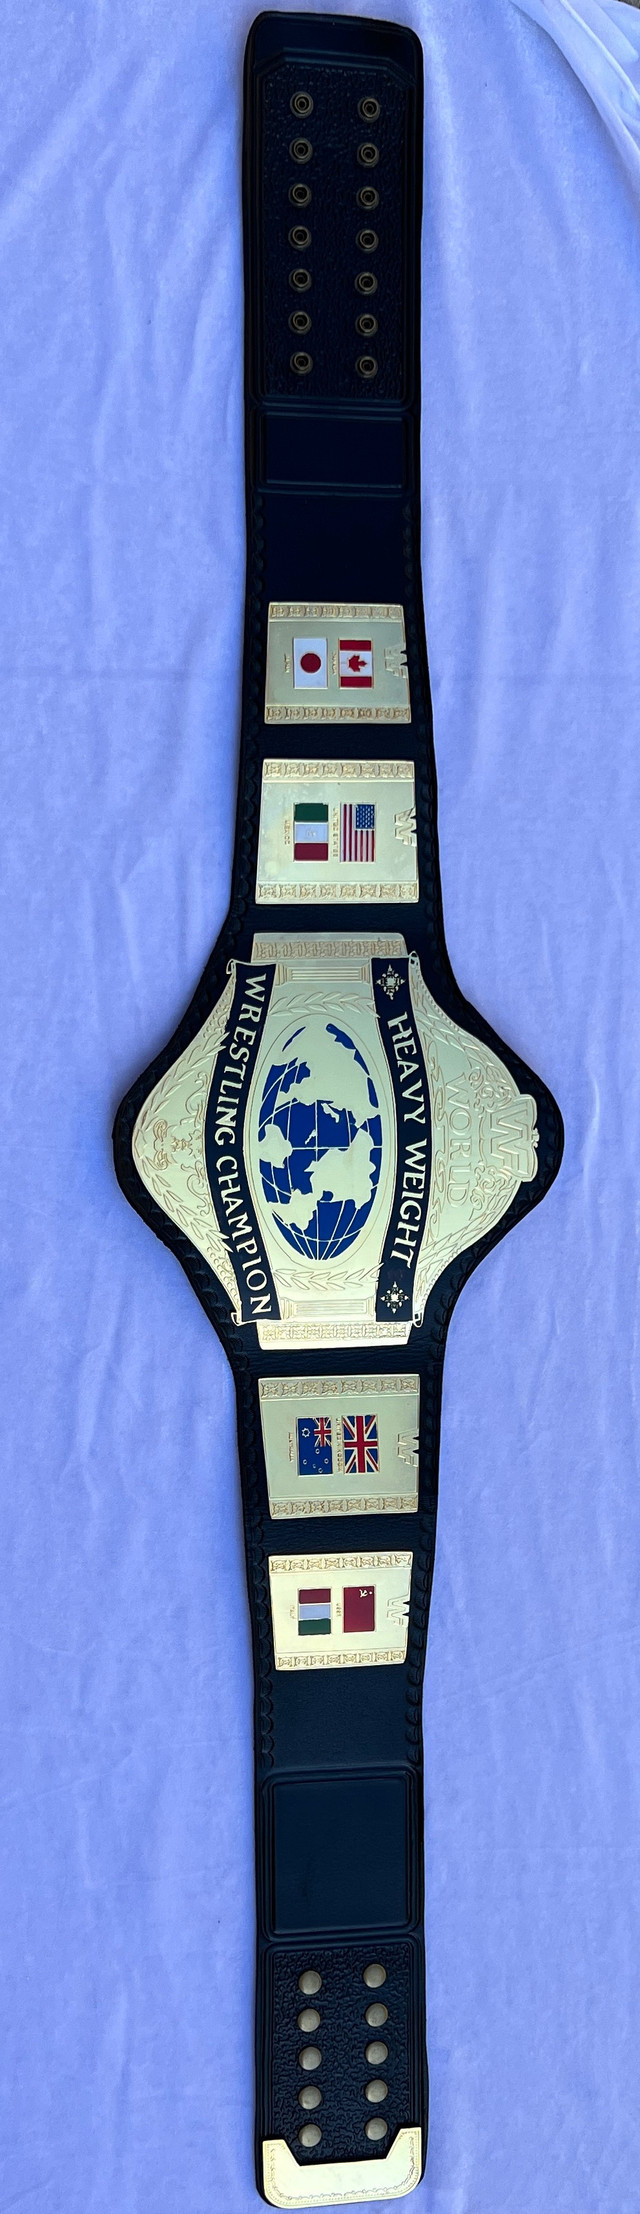 86 WORLD Heavyweight Wrestling Championship Replica Tittle  in Arts & Collectibles in Oakville / Halton Region